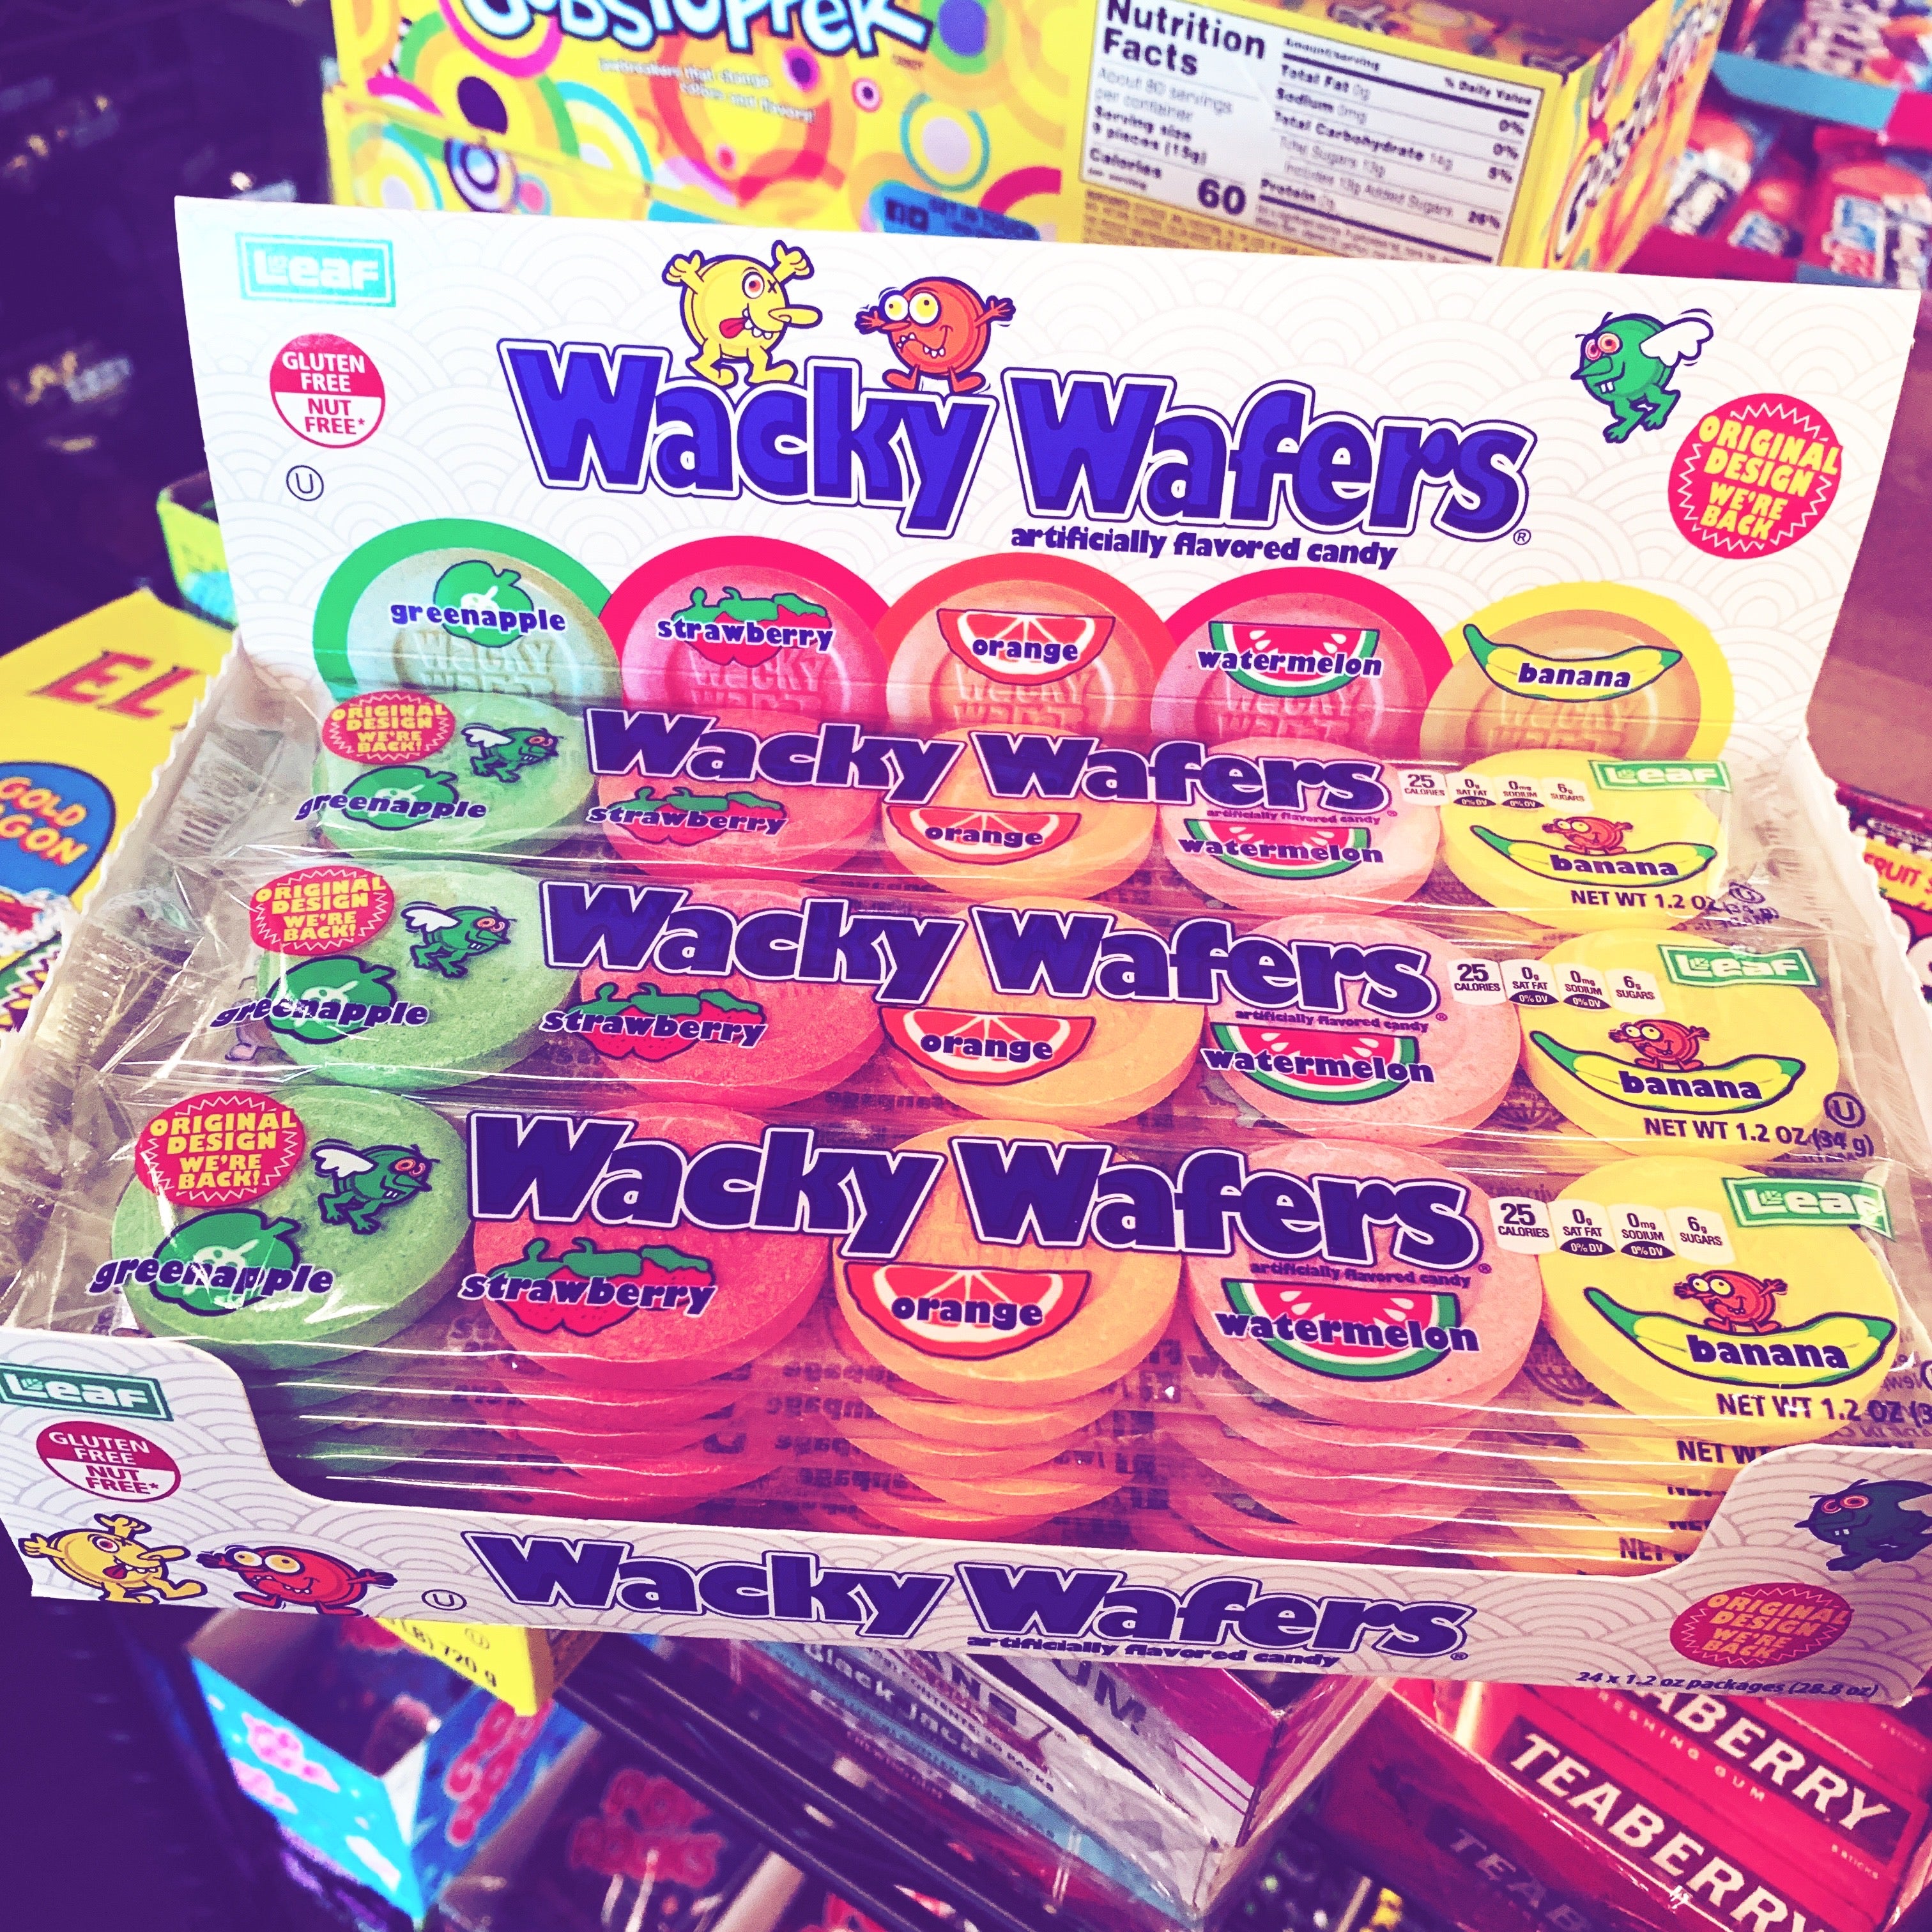 Wacky Wafers